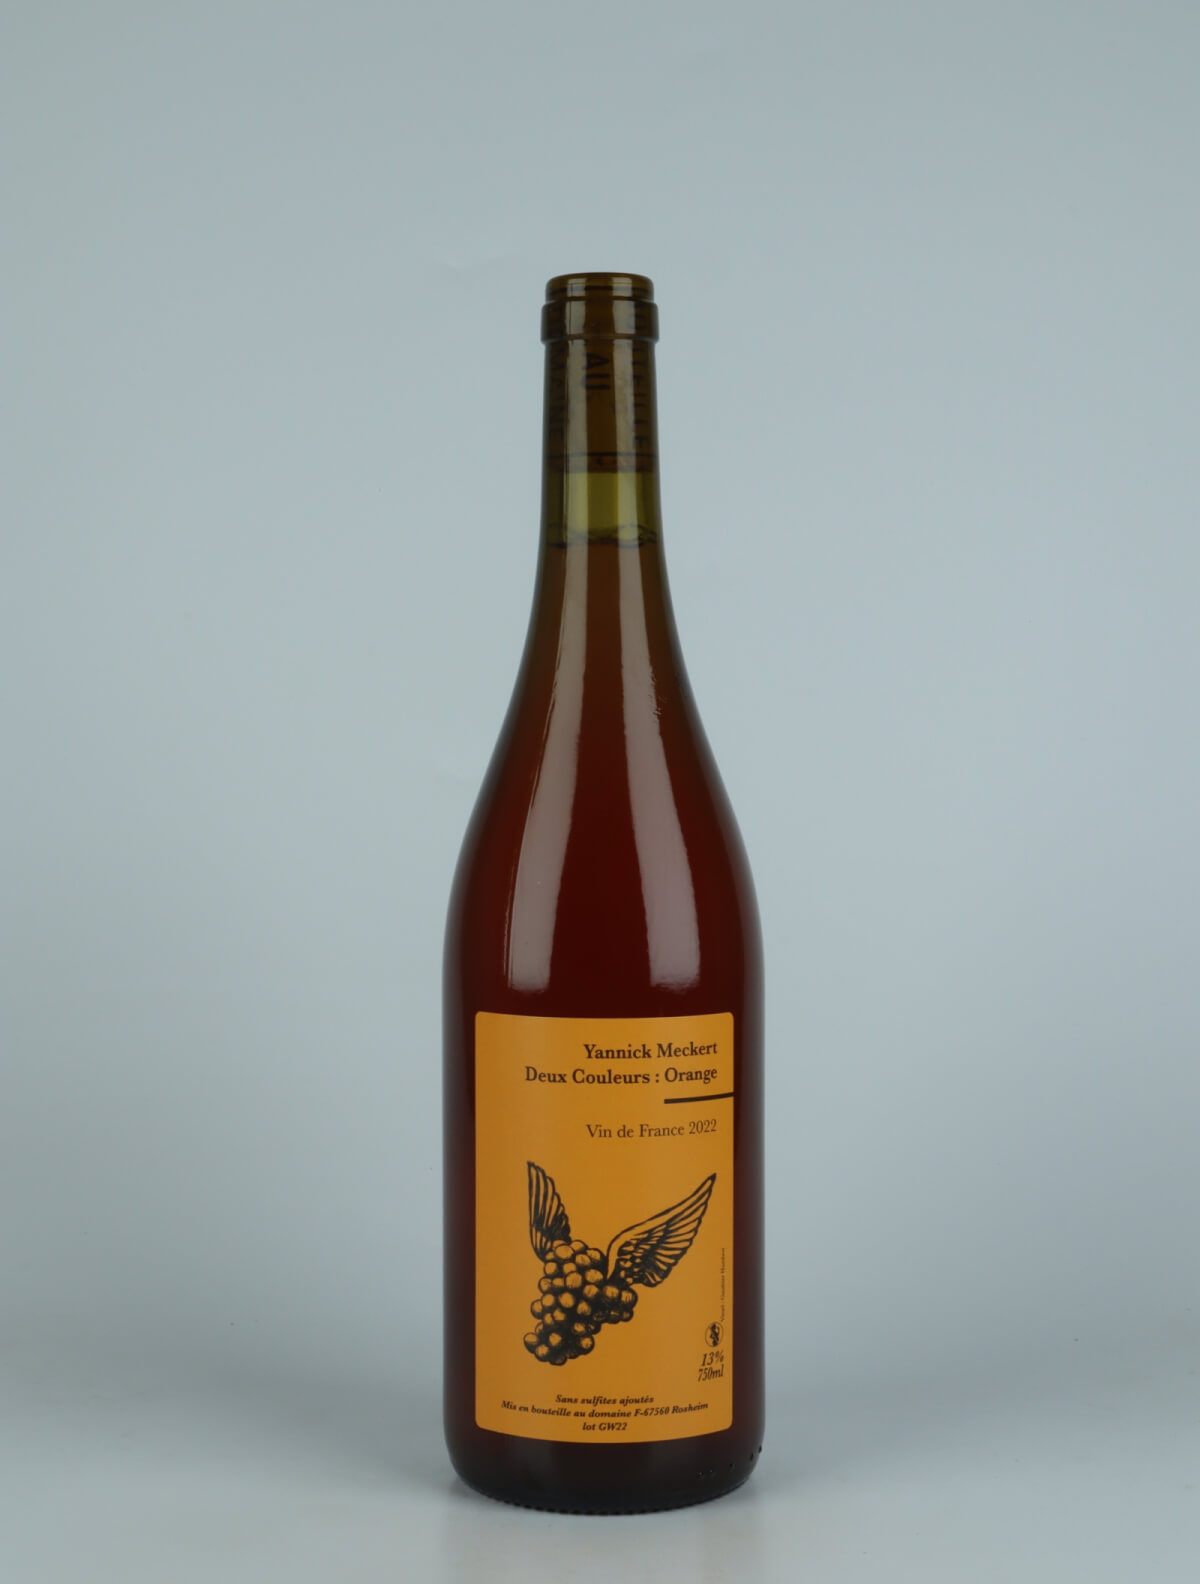 A bottle 2022 Deux Couleurs Orange Orange wine from Yannick Meckert, Alsace in France